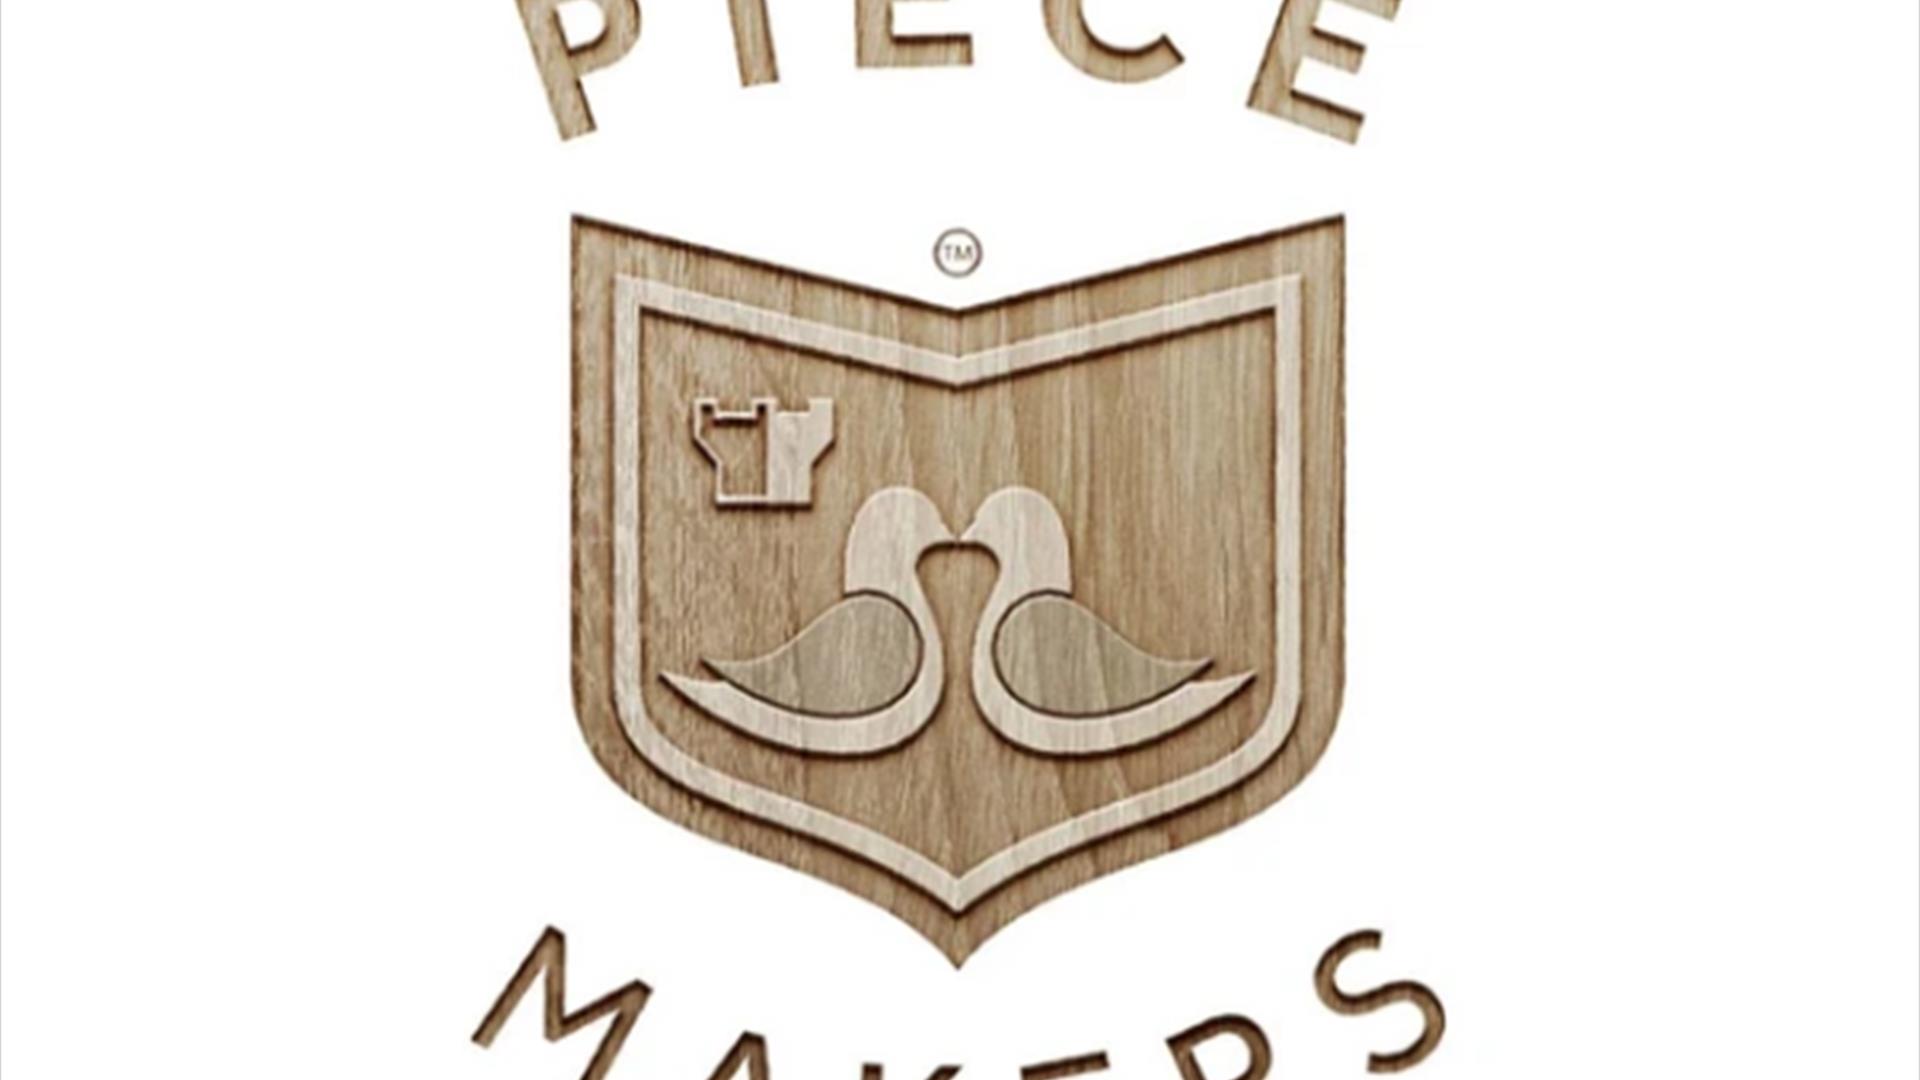 Piece Makers logo.